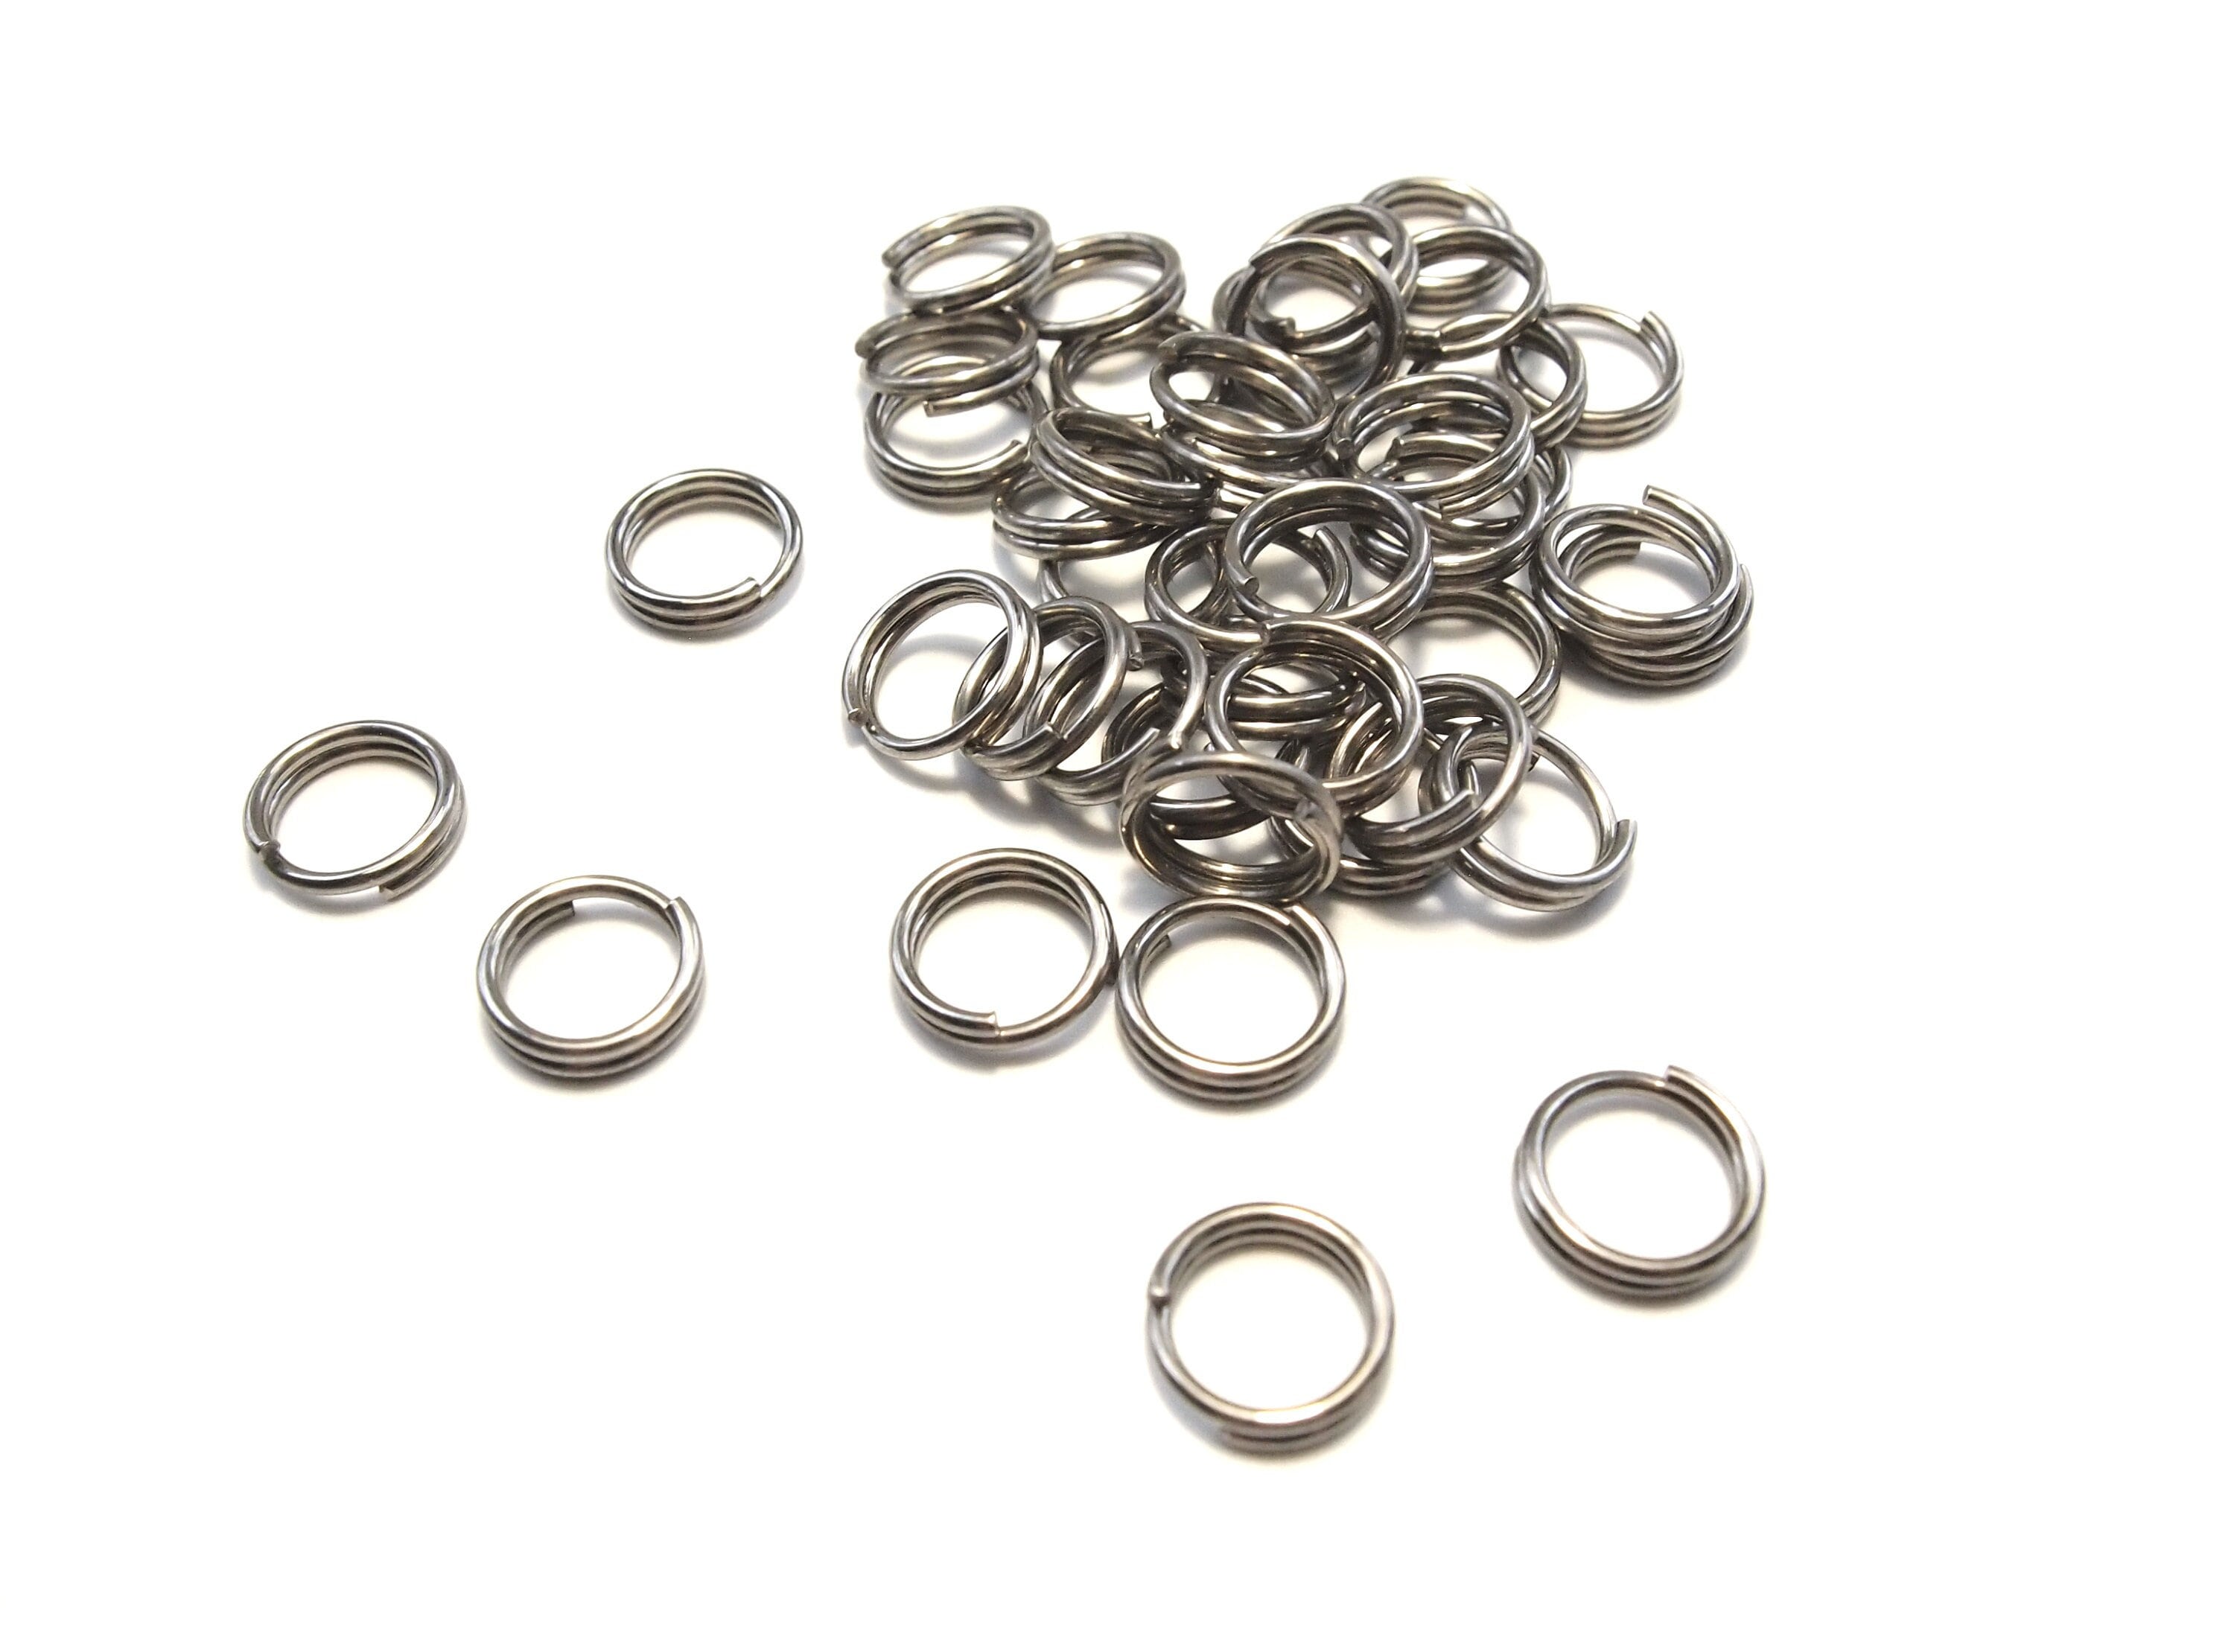 Yihaifu 600pcs Metal Split Rings Stainless Stainless Steel Key Rings Steel Double Loop Jump Ring for Jewelry Making 5mm/6mm/7mm/8mm/10mm/14mm 